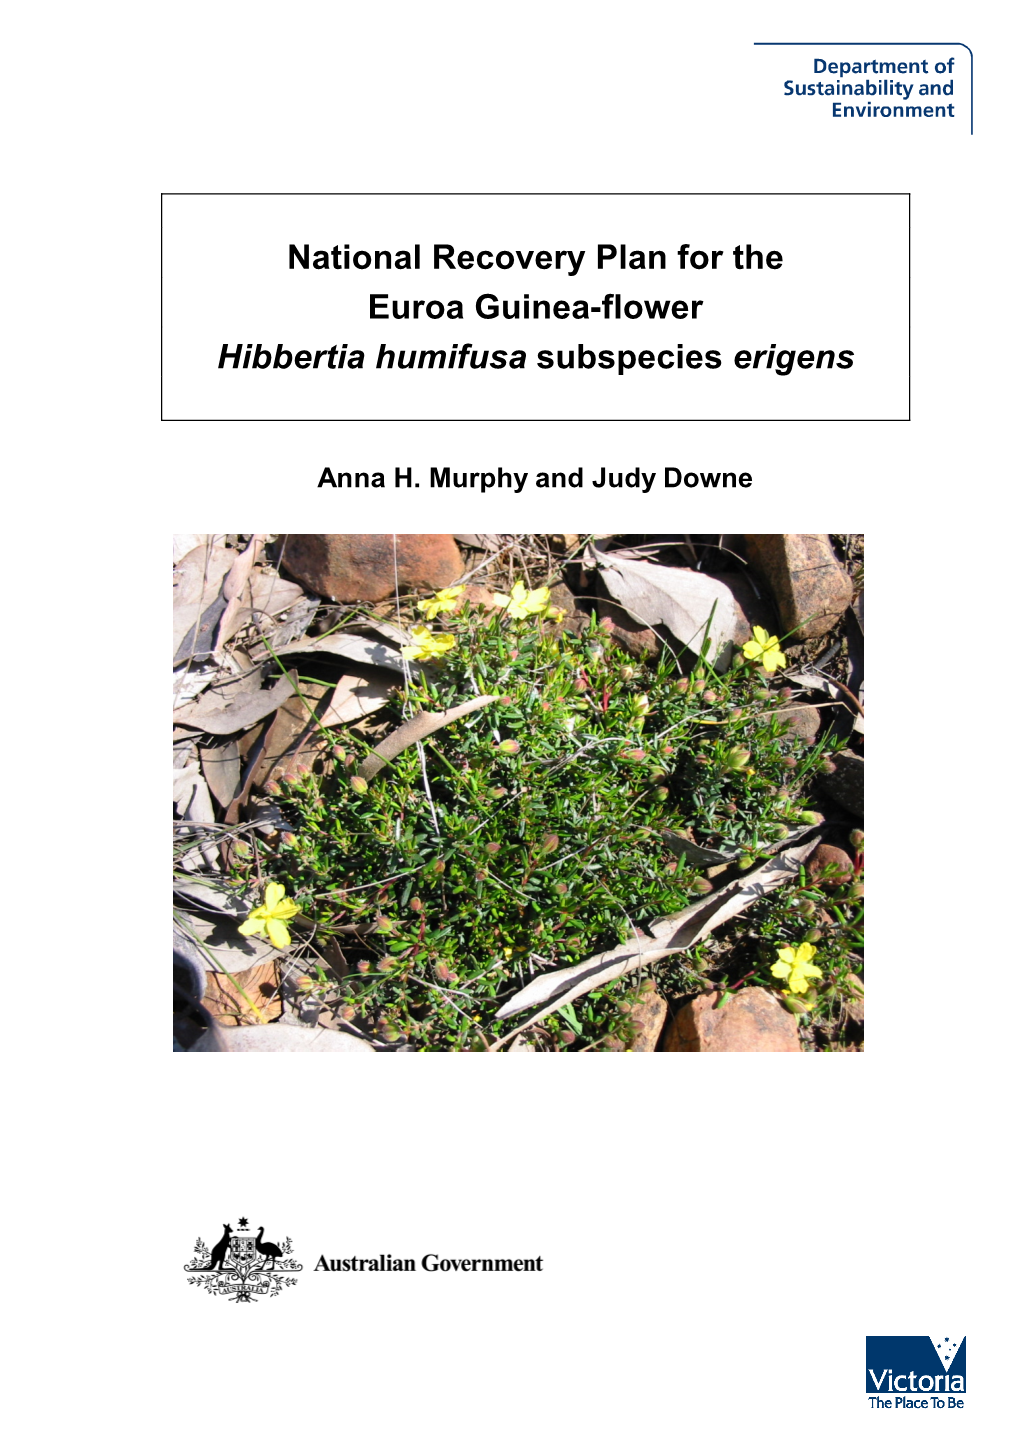 National Recovery Plan for the Euroa Guinea-Flower Hibbertia Humifusa Subspecies Erigens